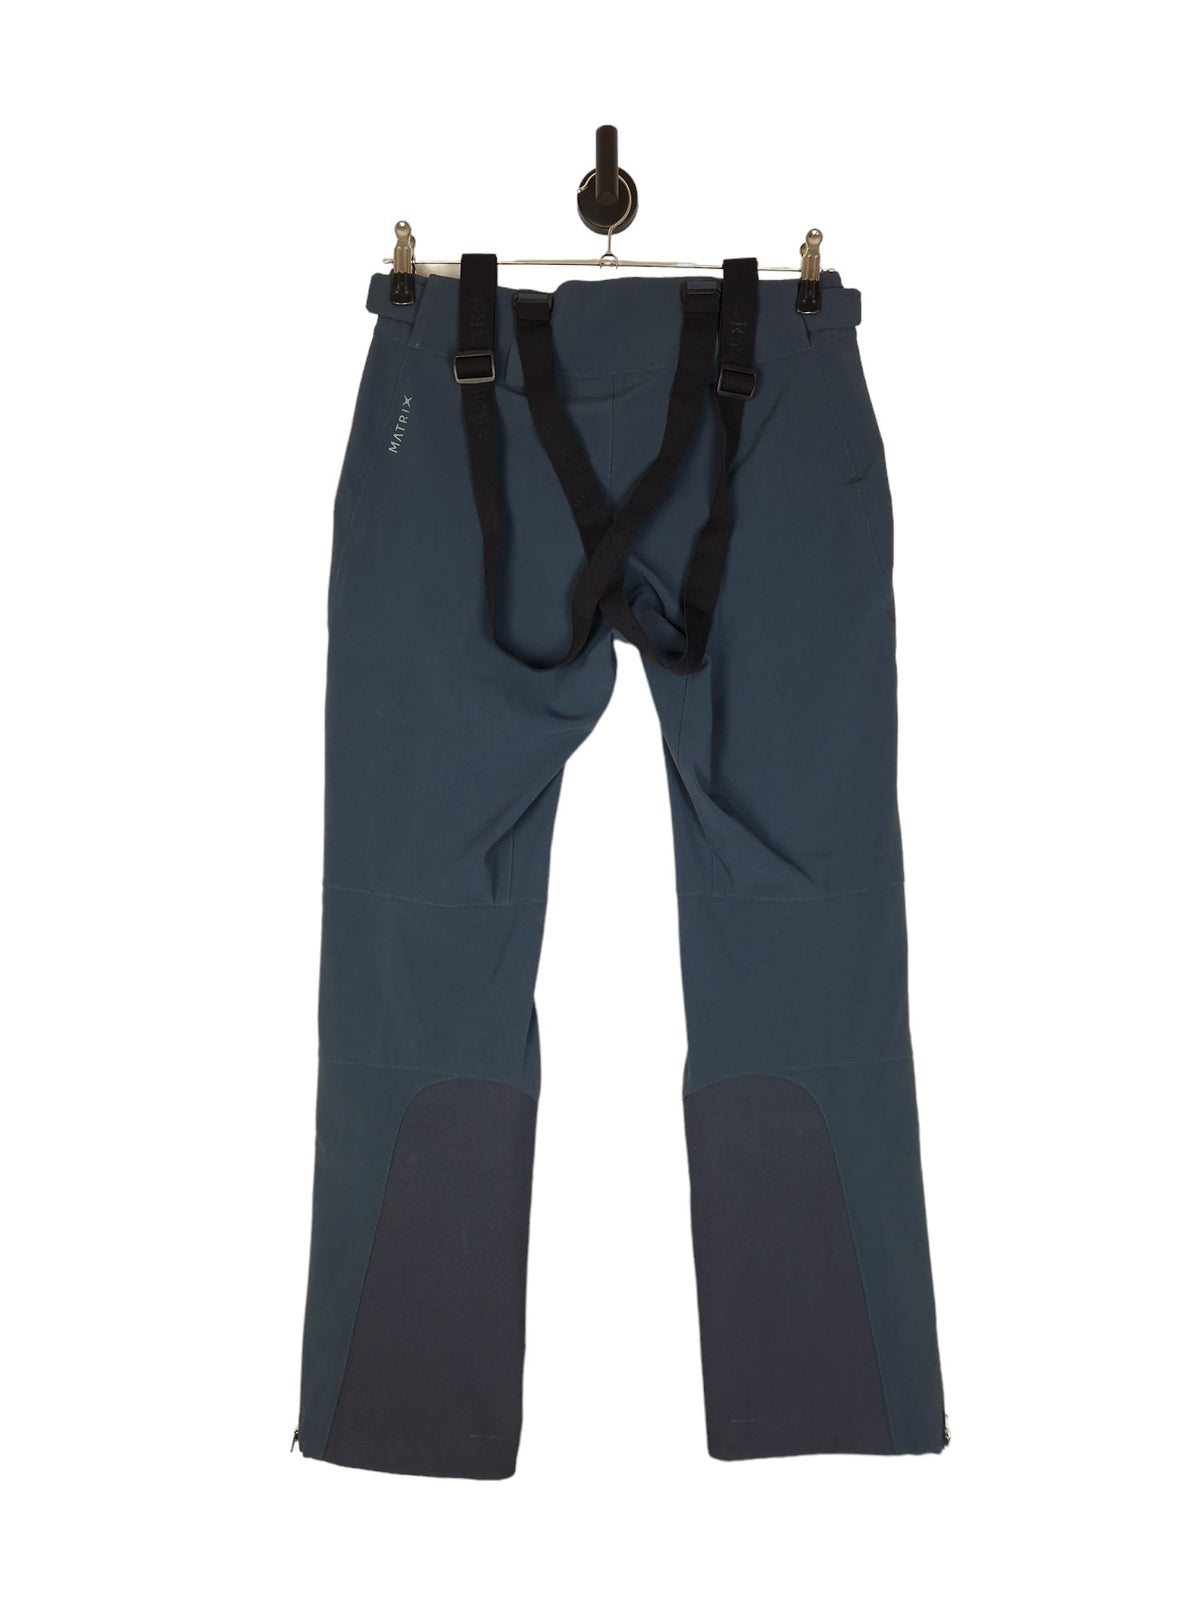 Rab Ascendor Pants - Size UK 12